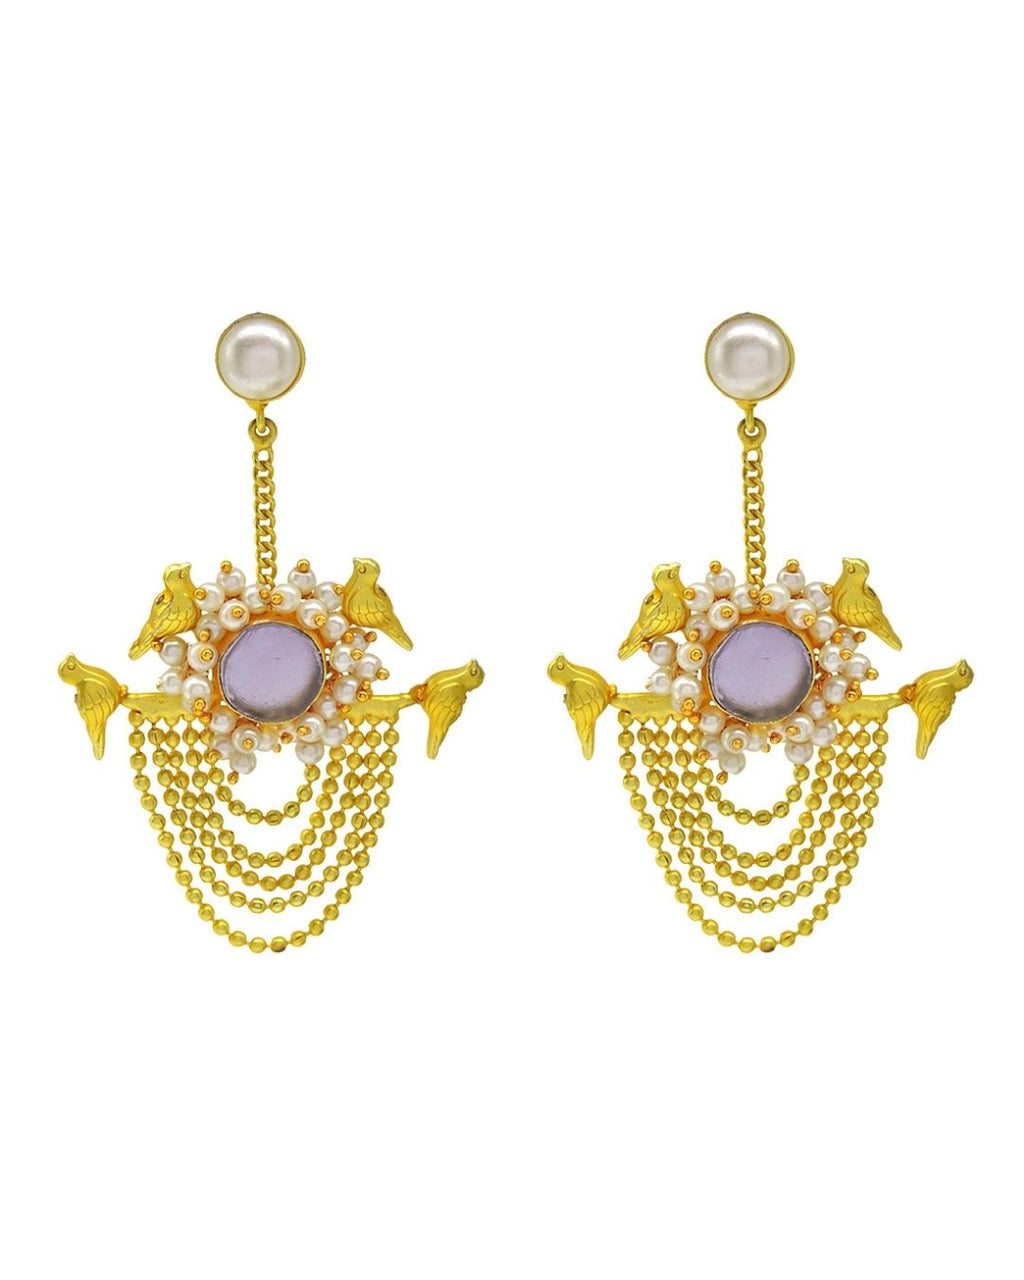 Sora Pearl Earrings (Amethyst) - Earrings - Handcrafted Jewellery - Made in India - Dubai Jewellery, Fashion & Lifestyle - Dori